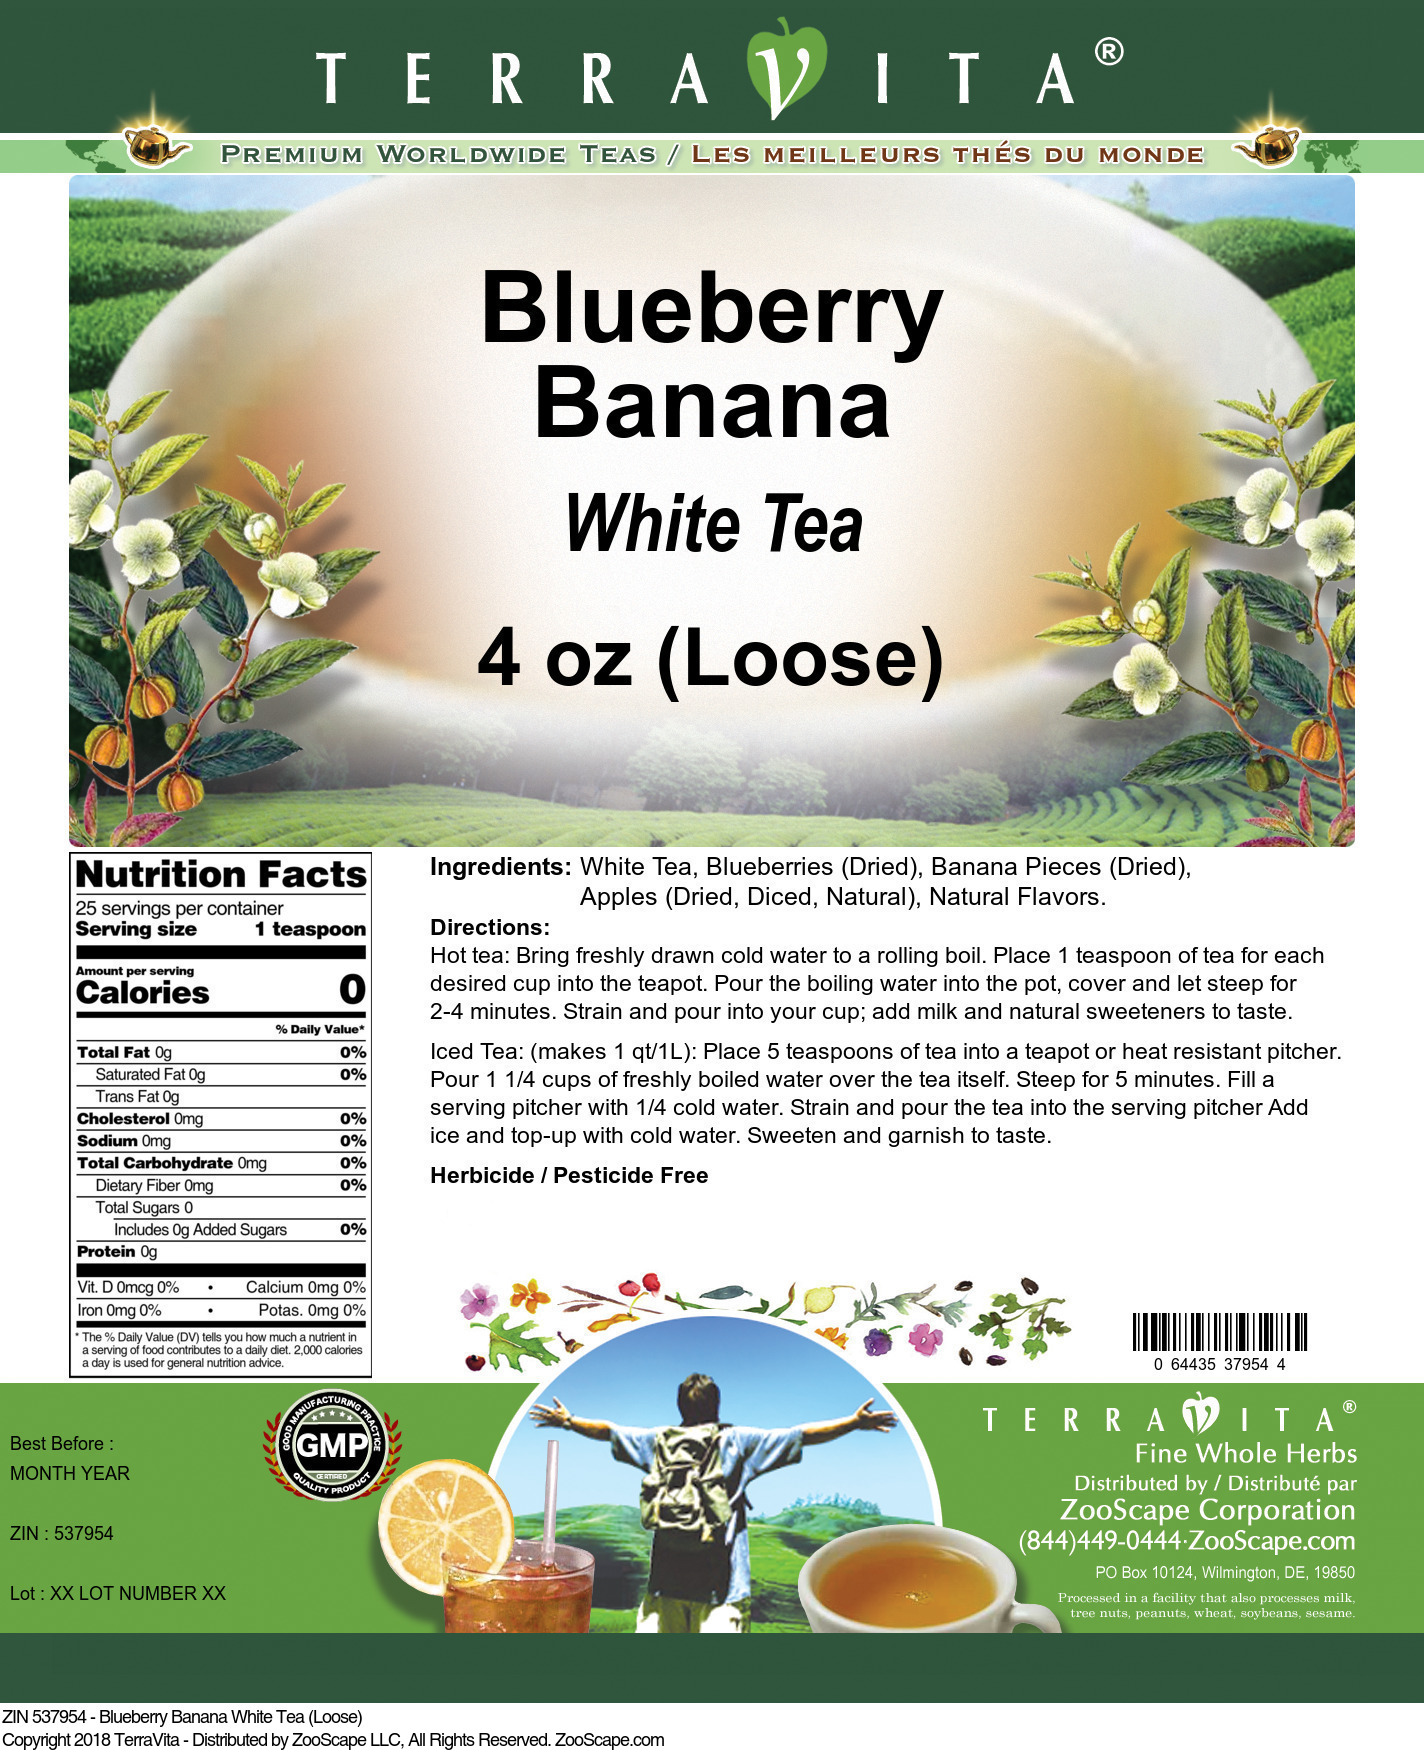 Blueberry Banana White Tea (Loose) - Label